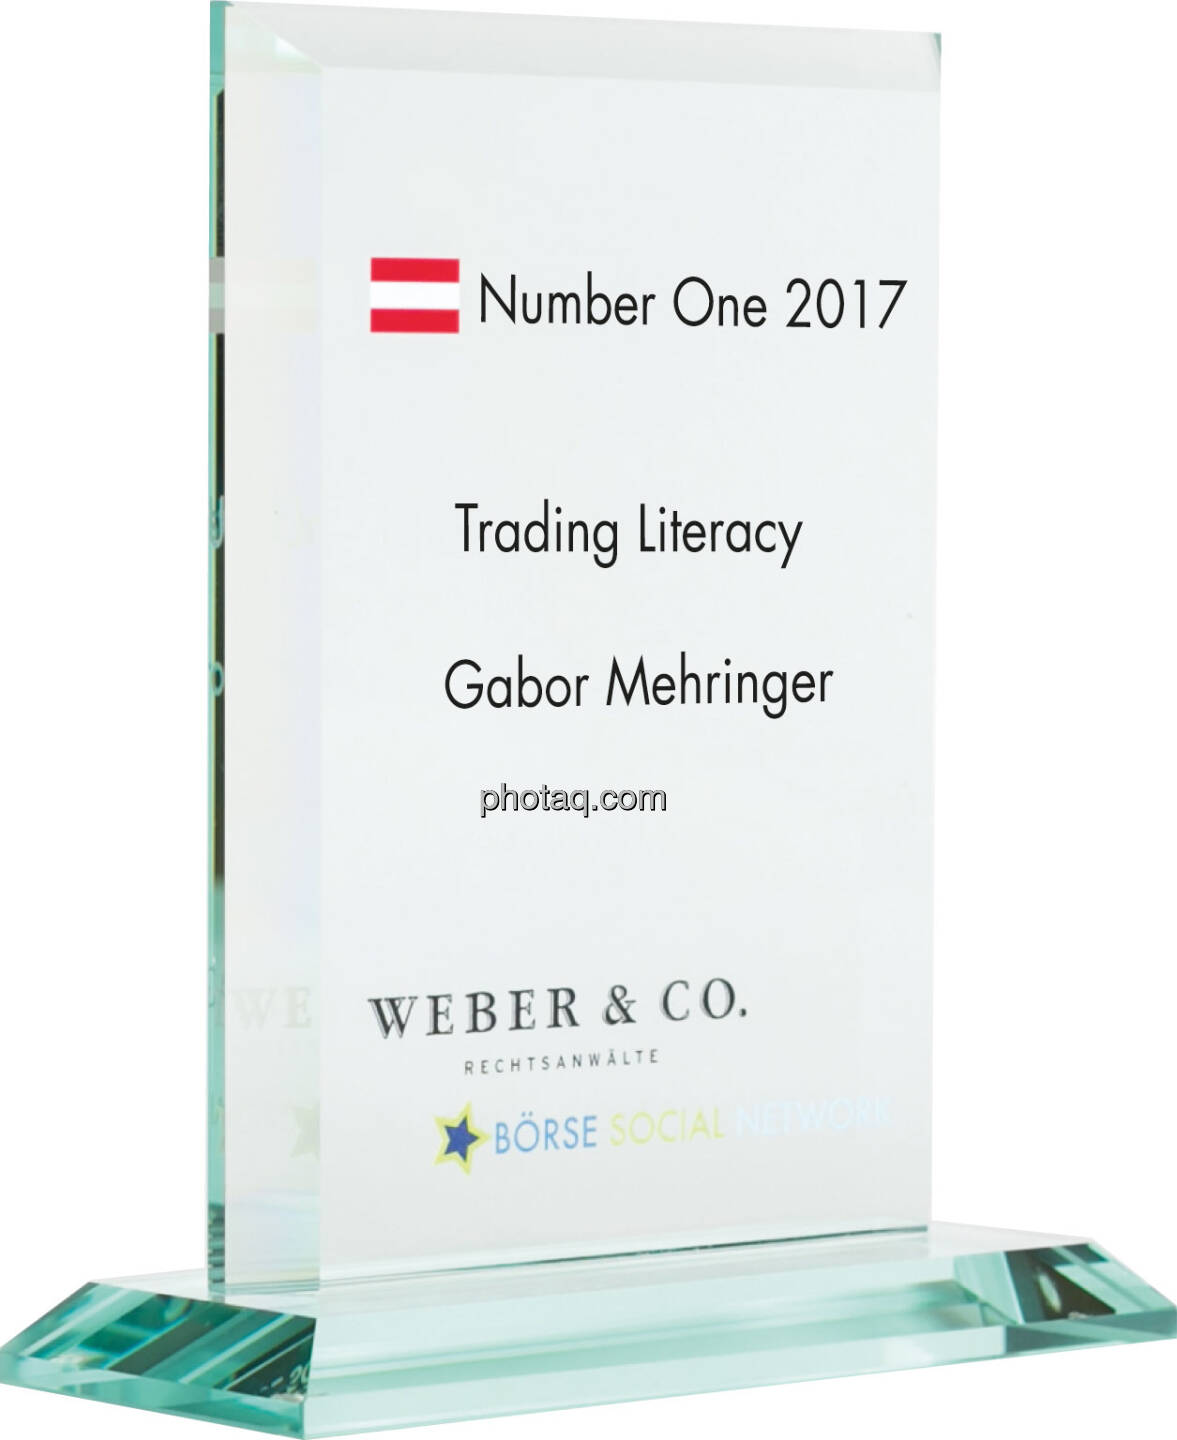 Number One Awards 2017 - Trading Literacy - Gabor Mehringer